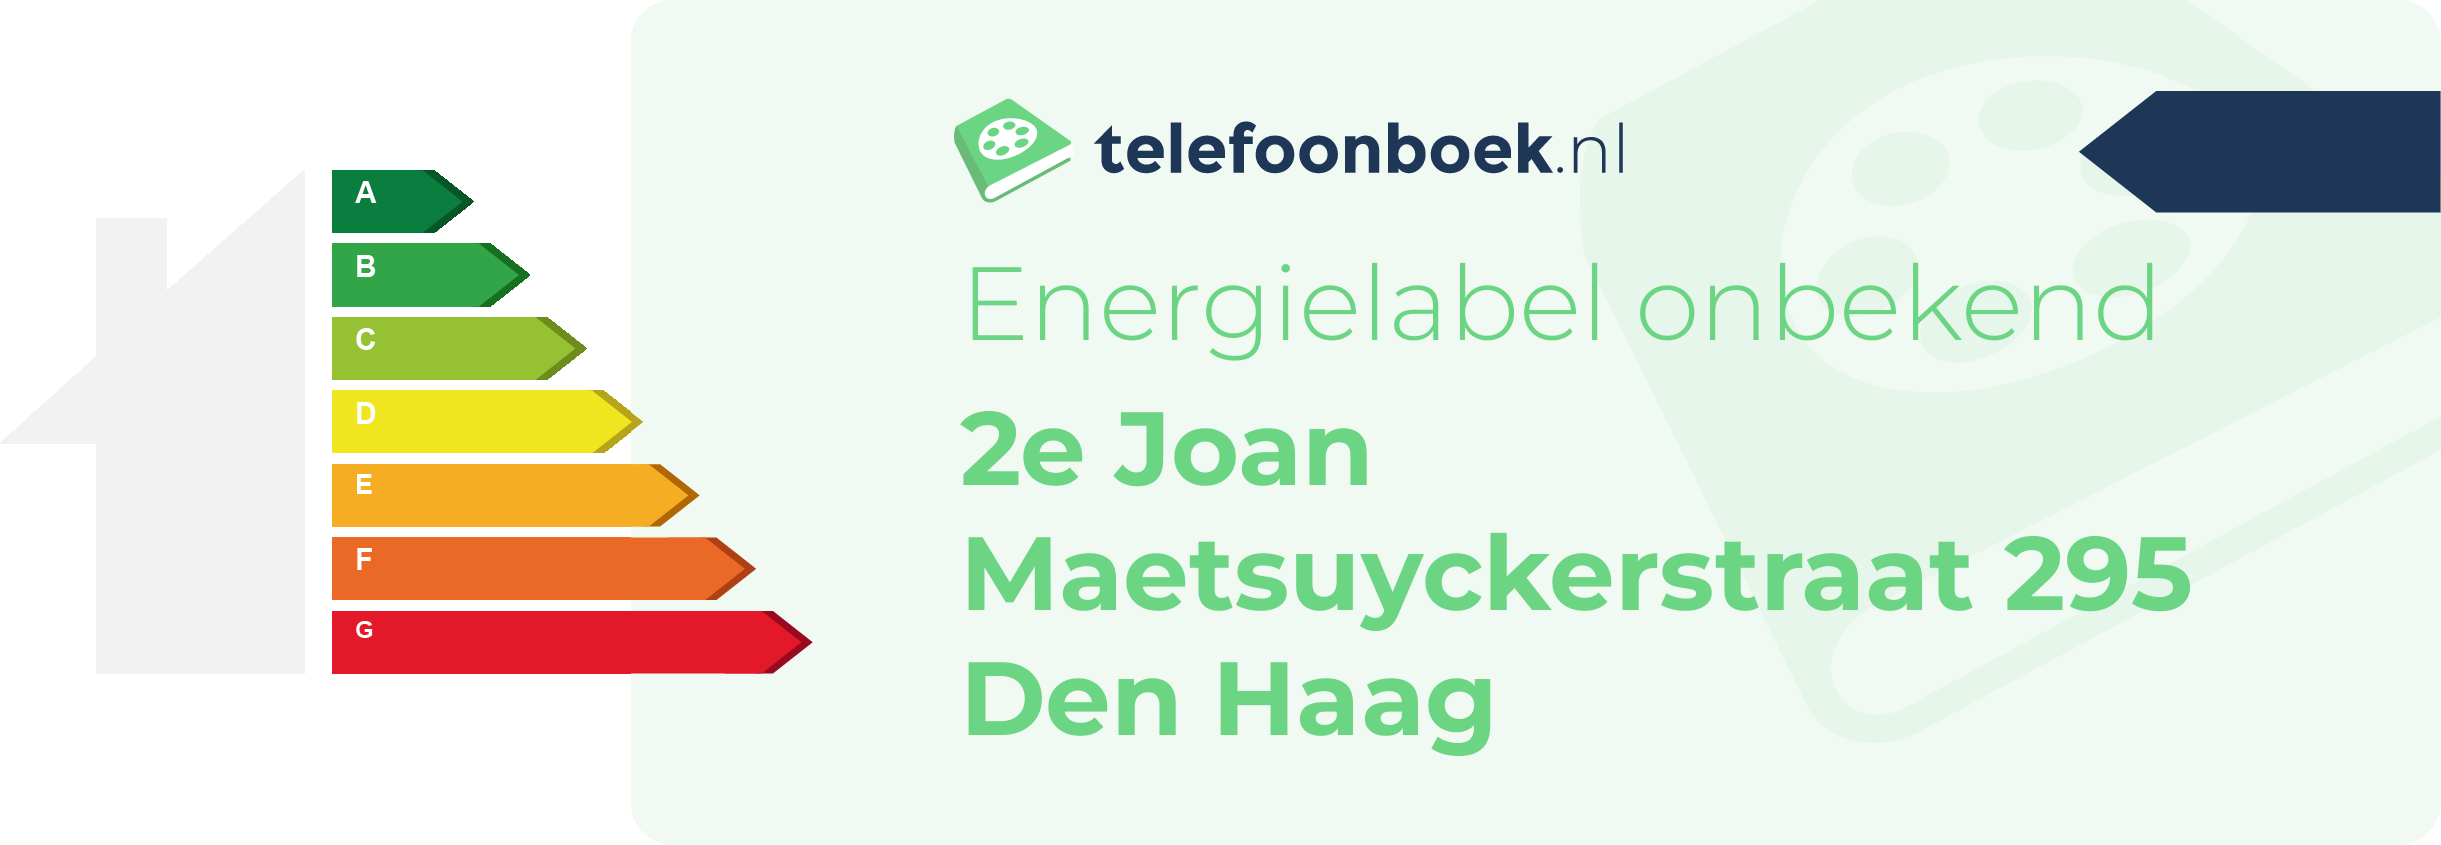 Energielabel 2e Joan Maetsuyckerstraat 295 Den Haag